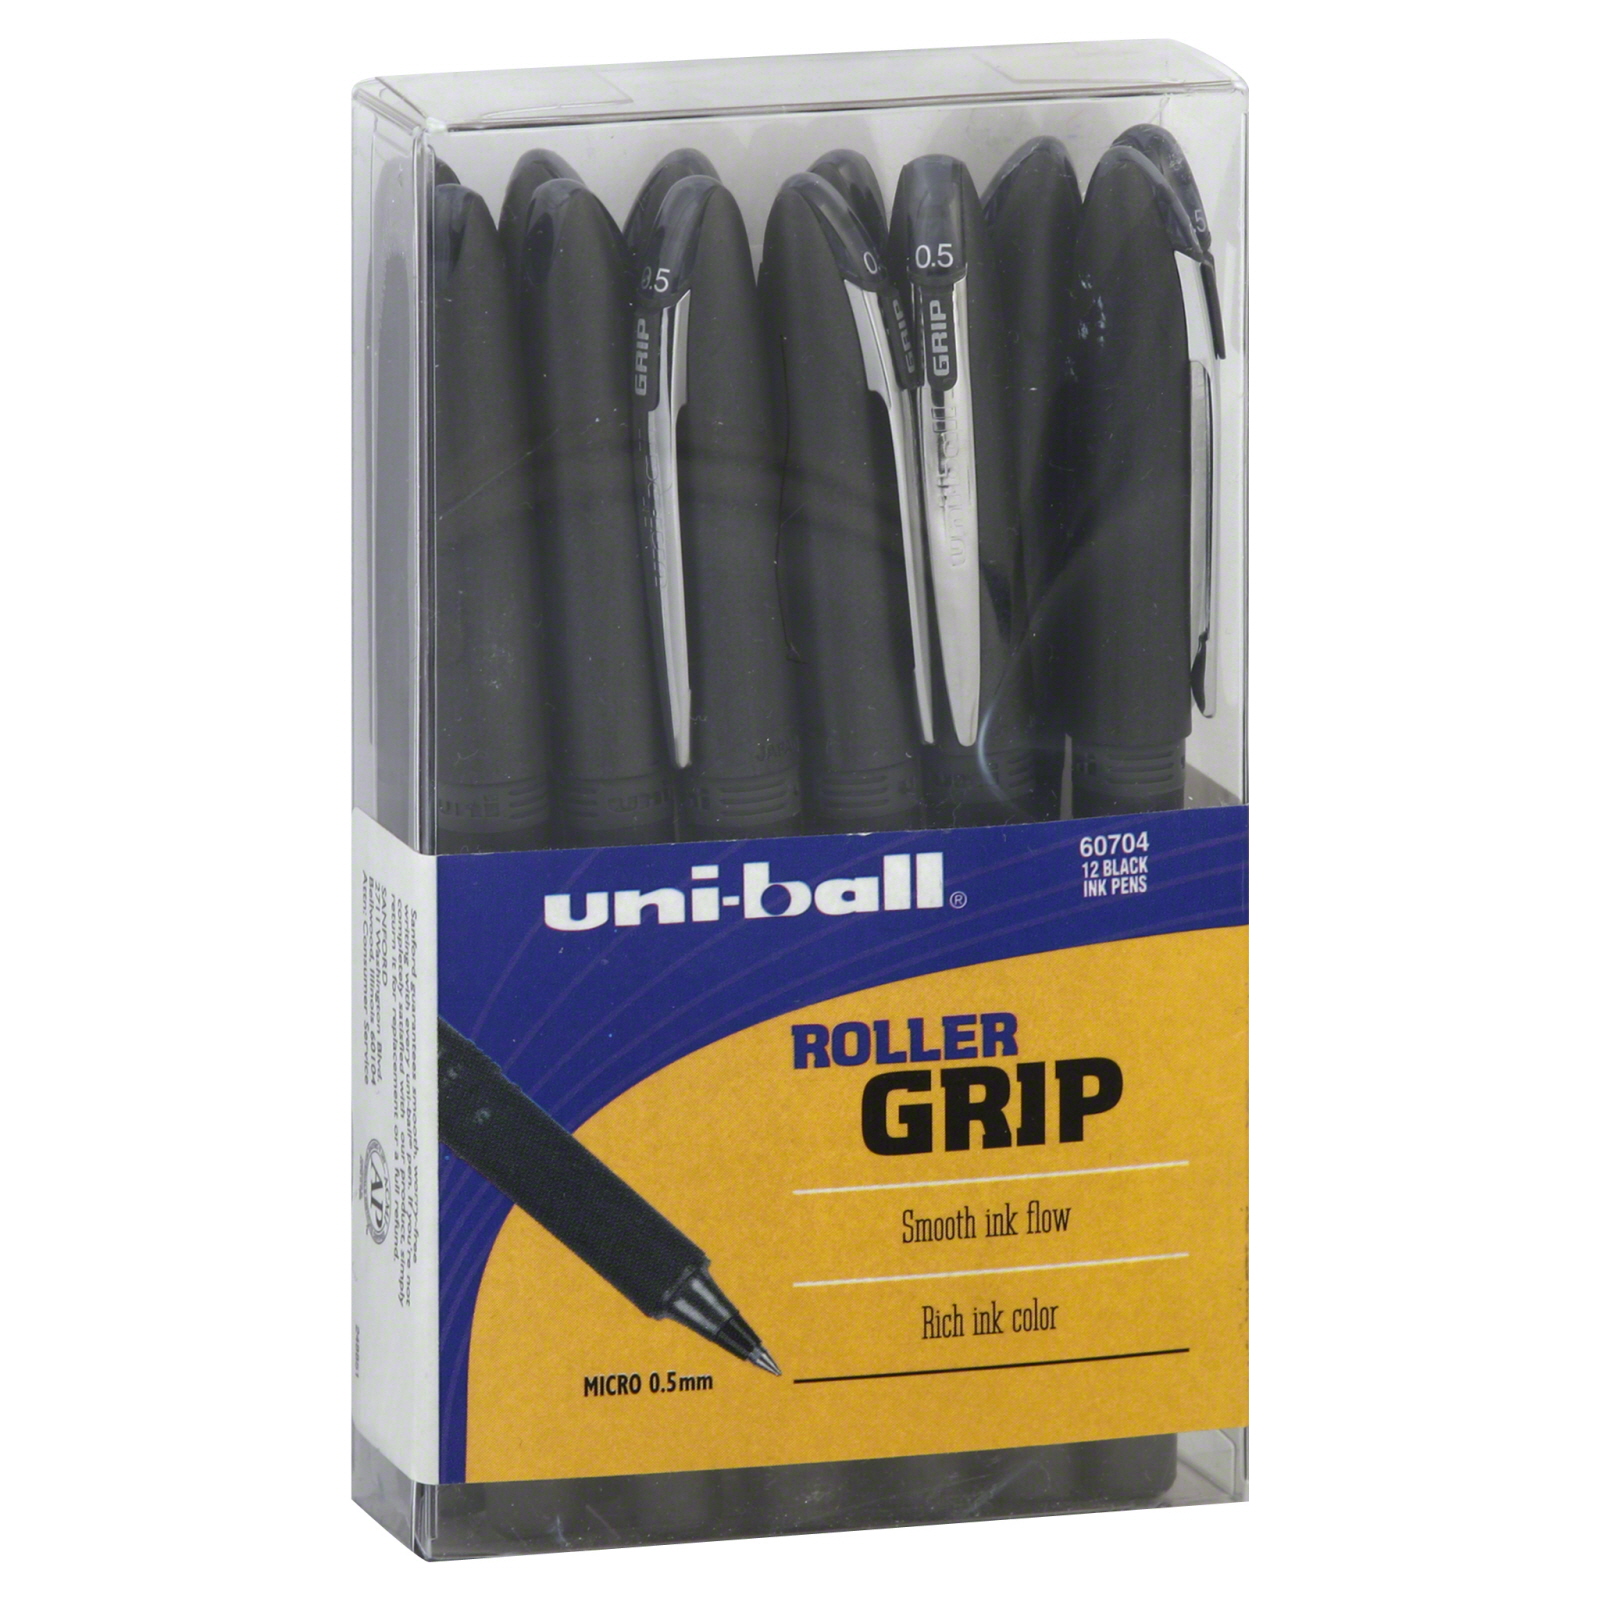 uni-ball SAN60704 Grip Roller Ball Pen, Black Ink, Micro, Dozen